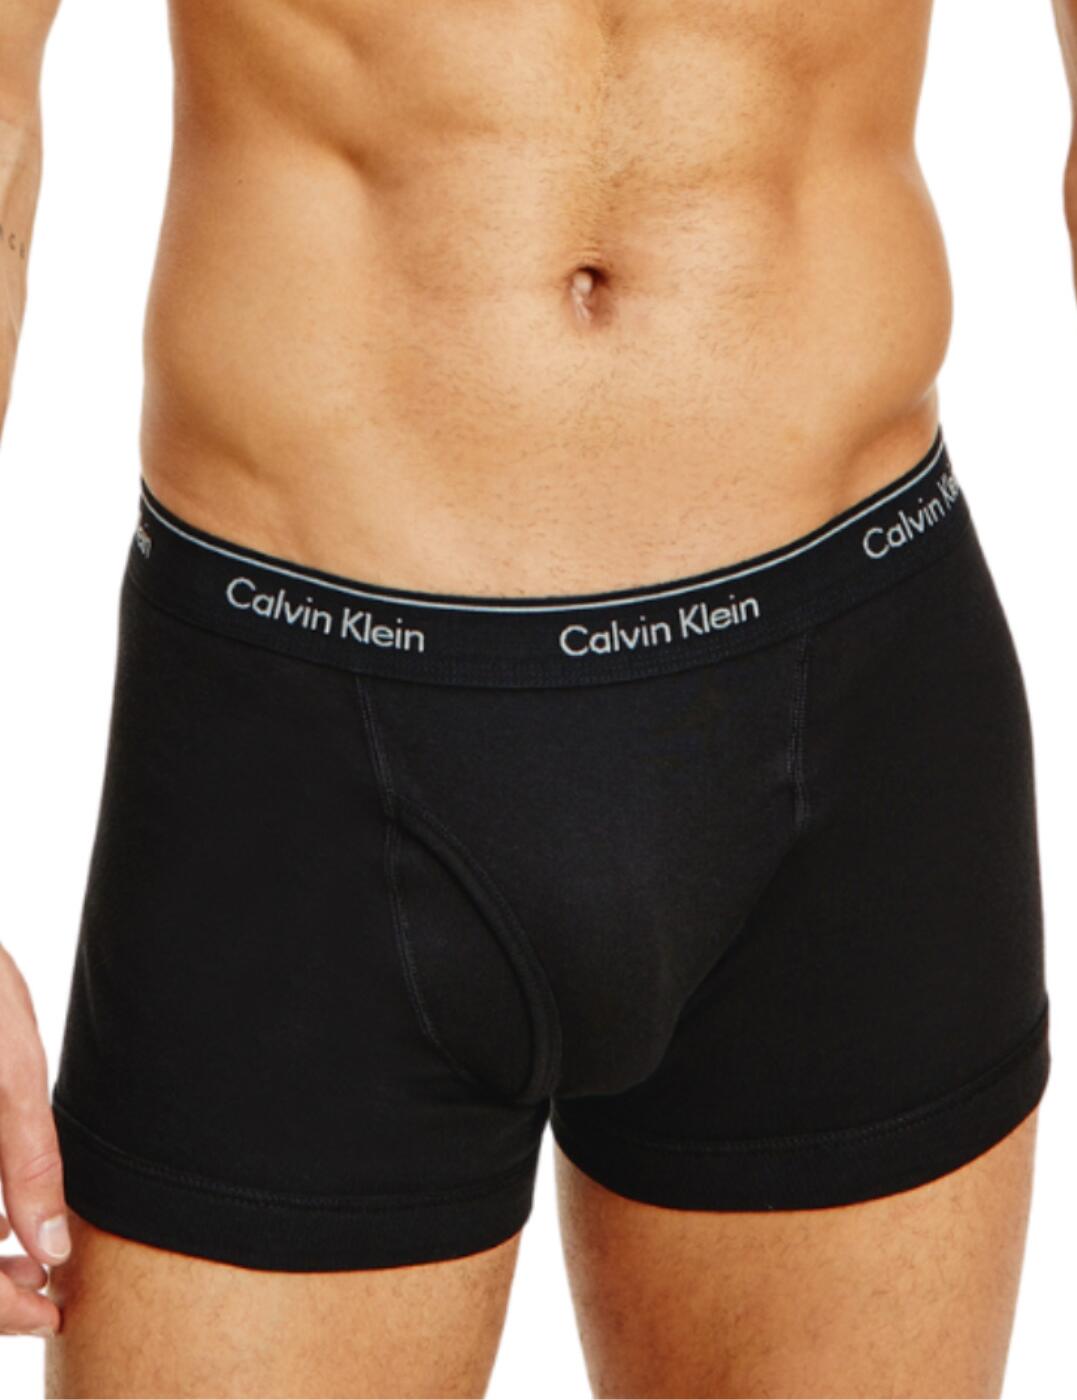 Calvin Klein Cotton Classics Trunks 3 Pack Black